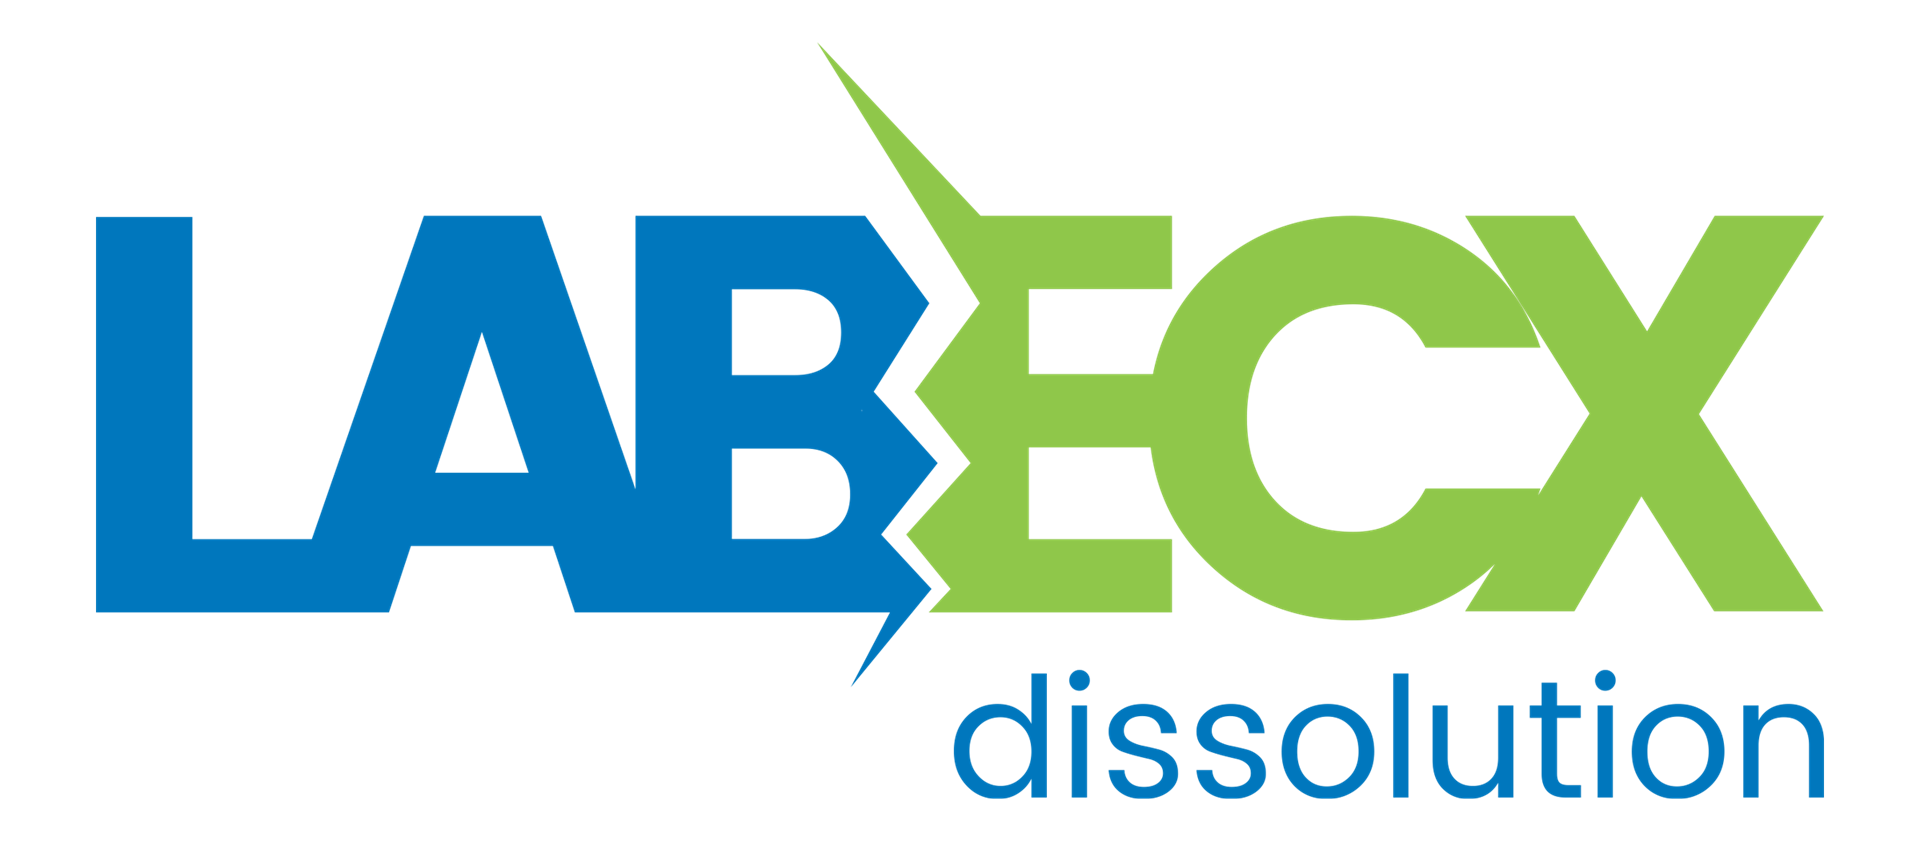 logo for Partner LabECX